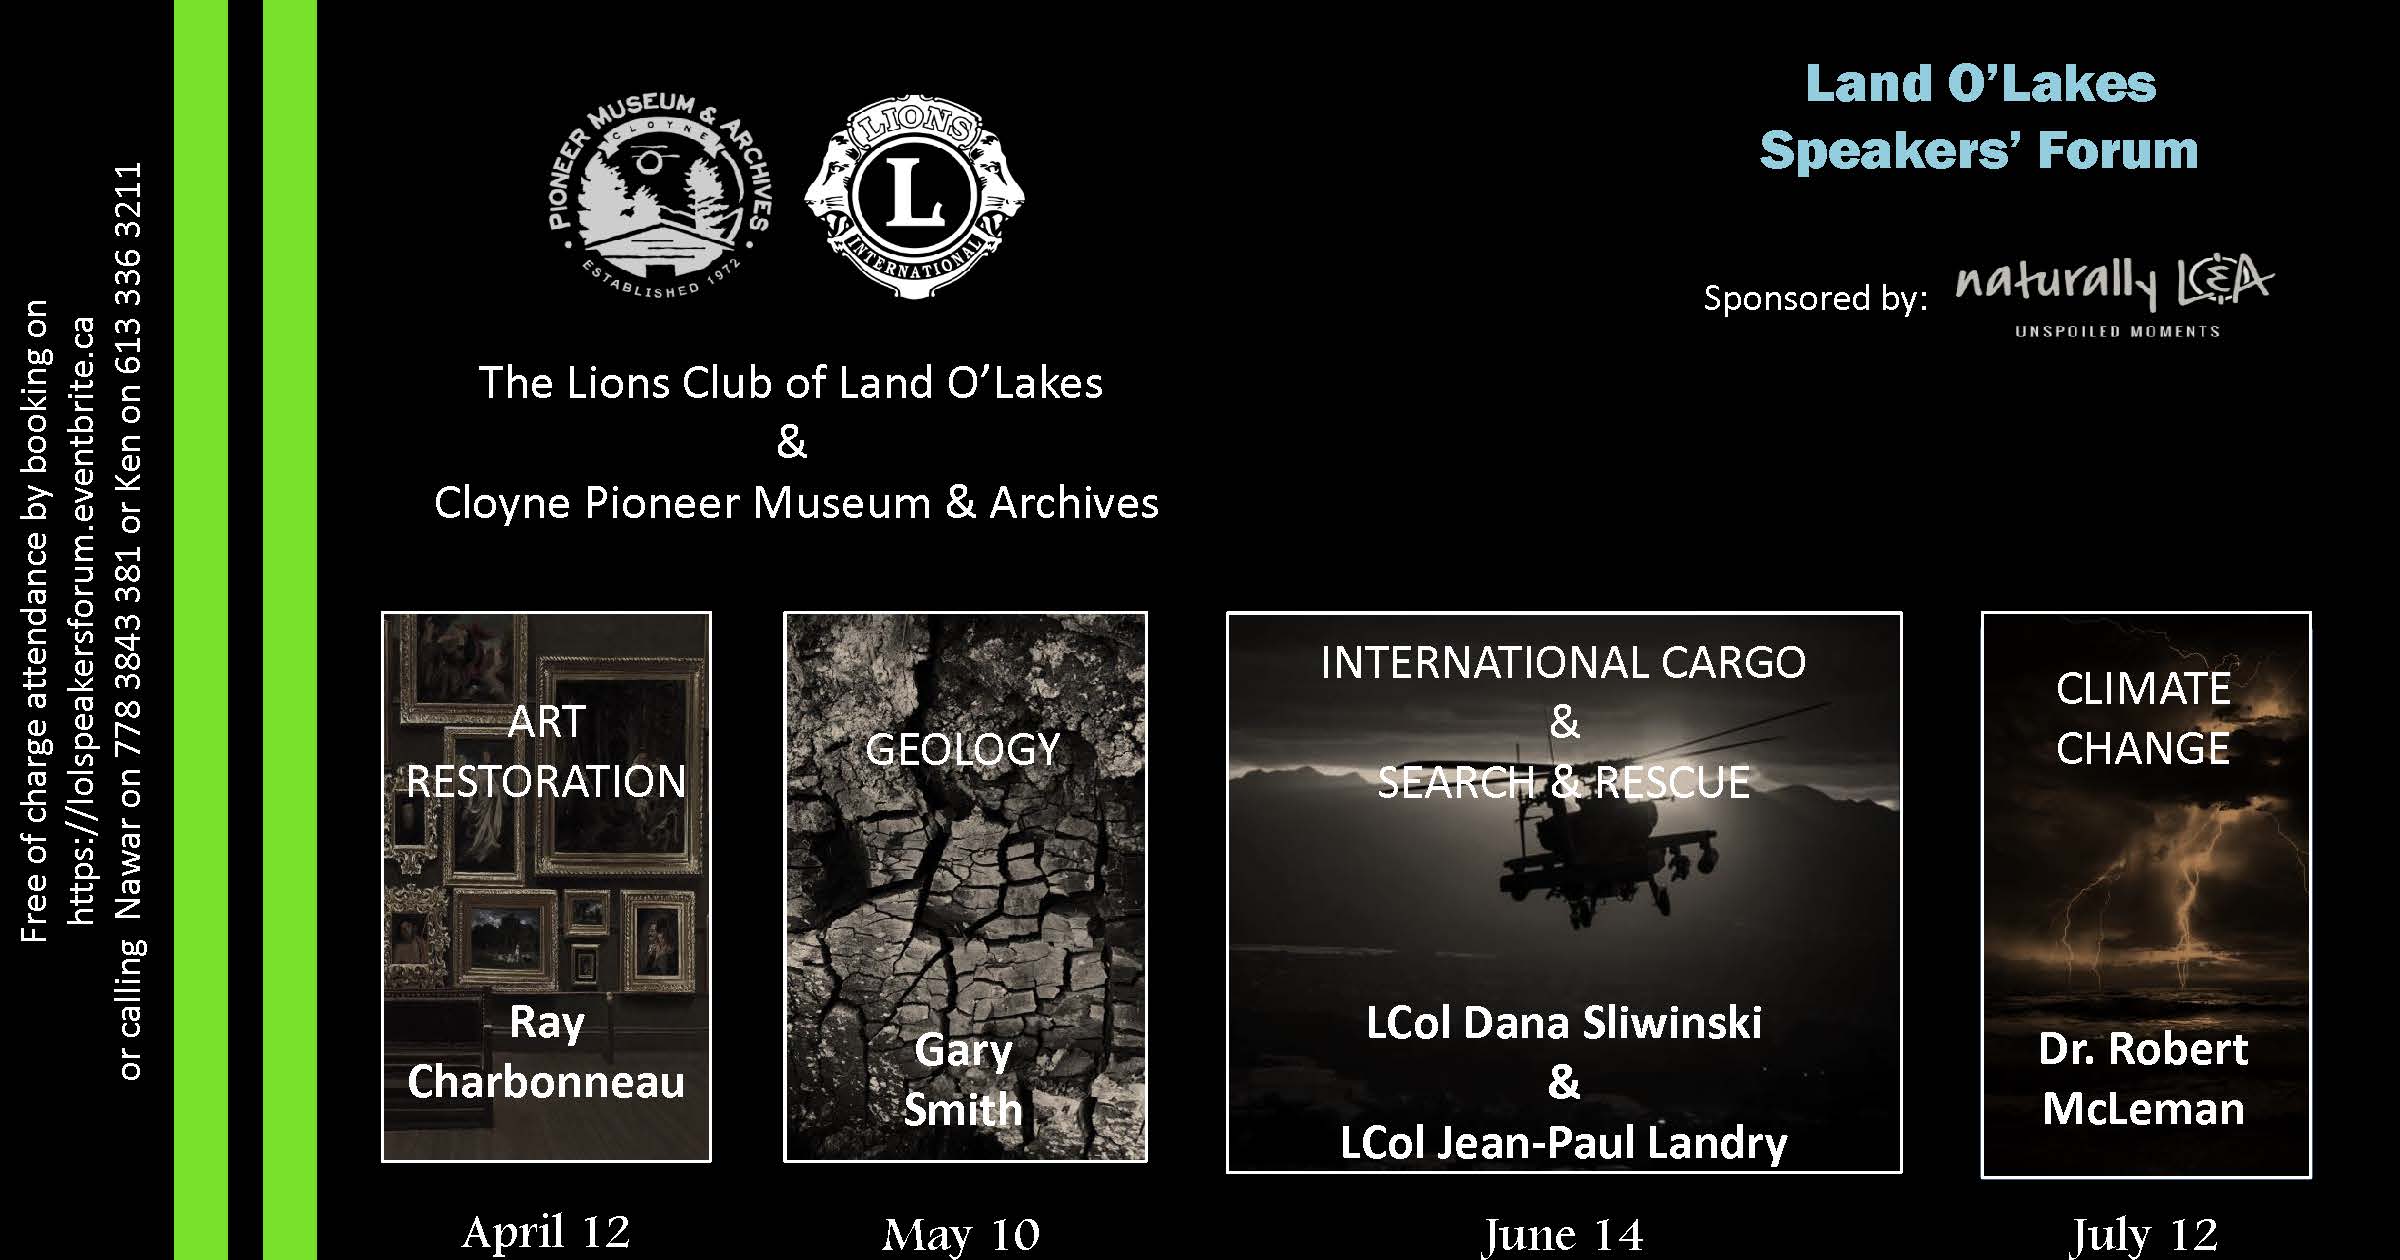 Land O' Lakes Speakers' Forum